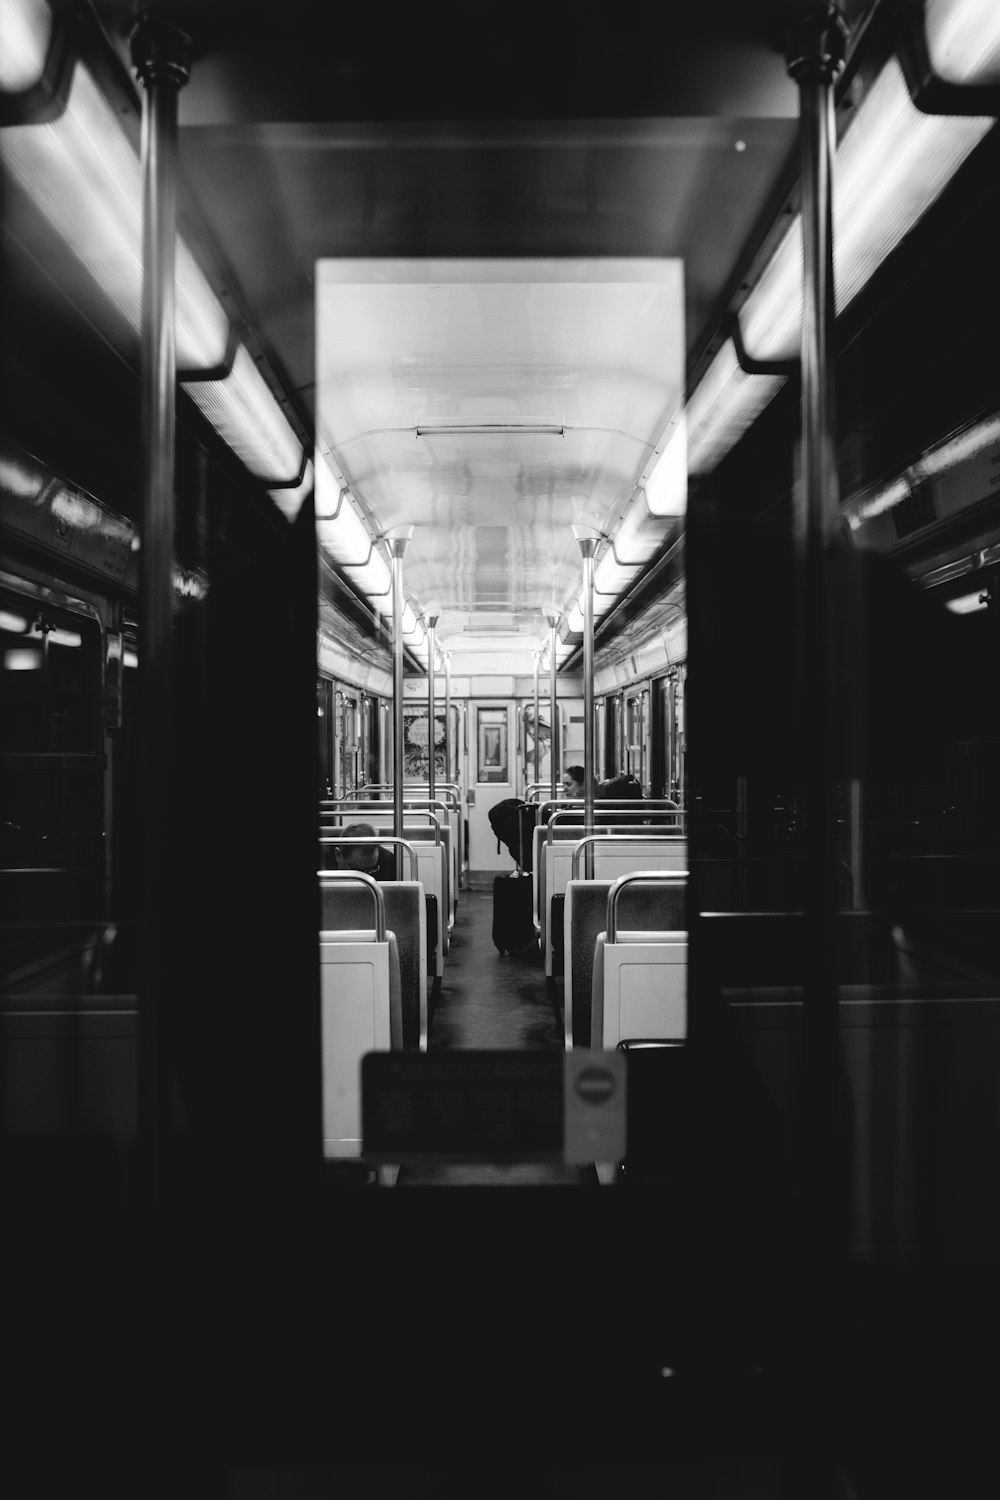 greyscale photo of train interior